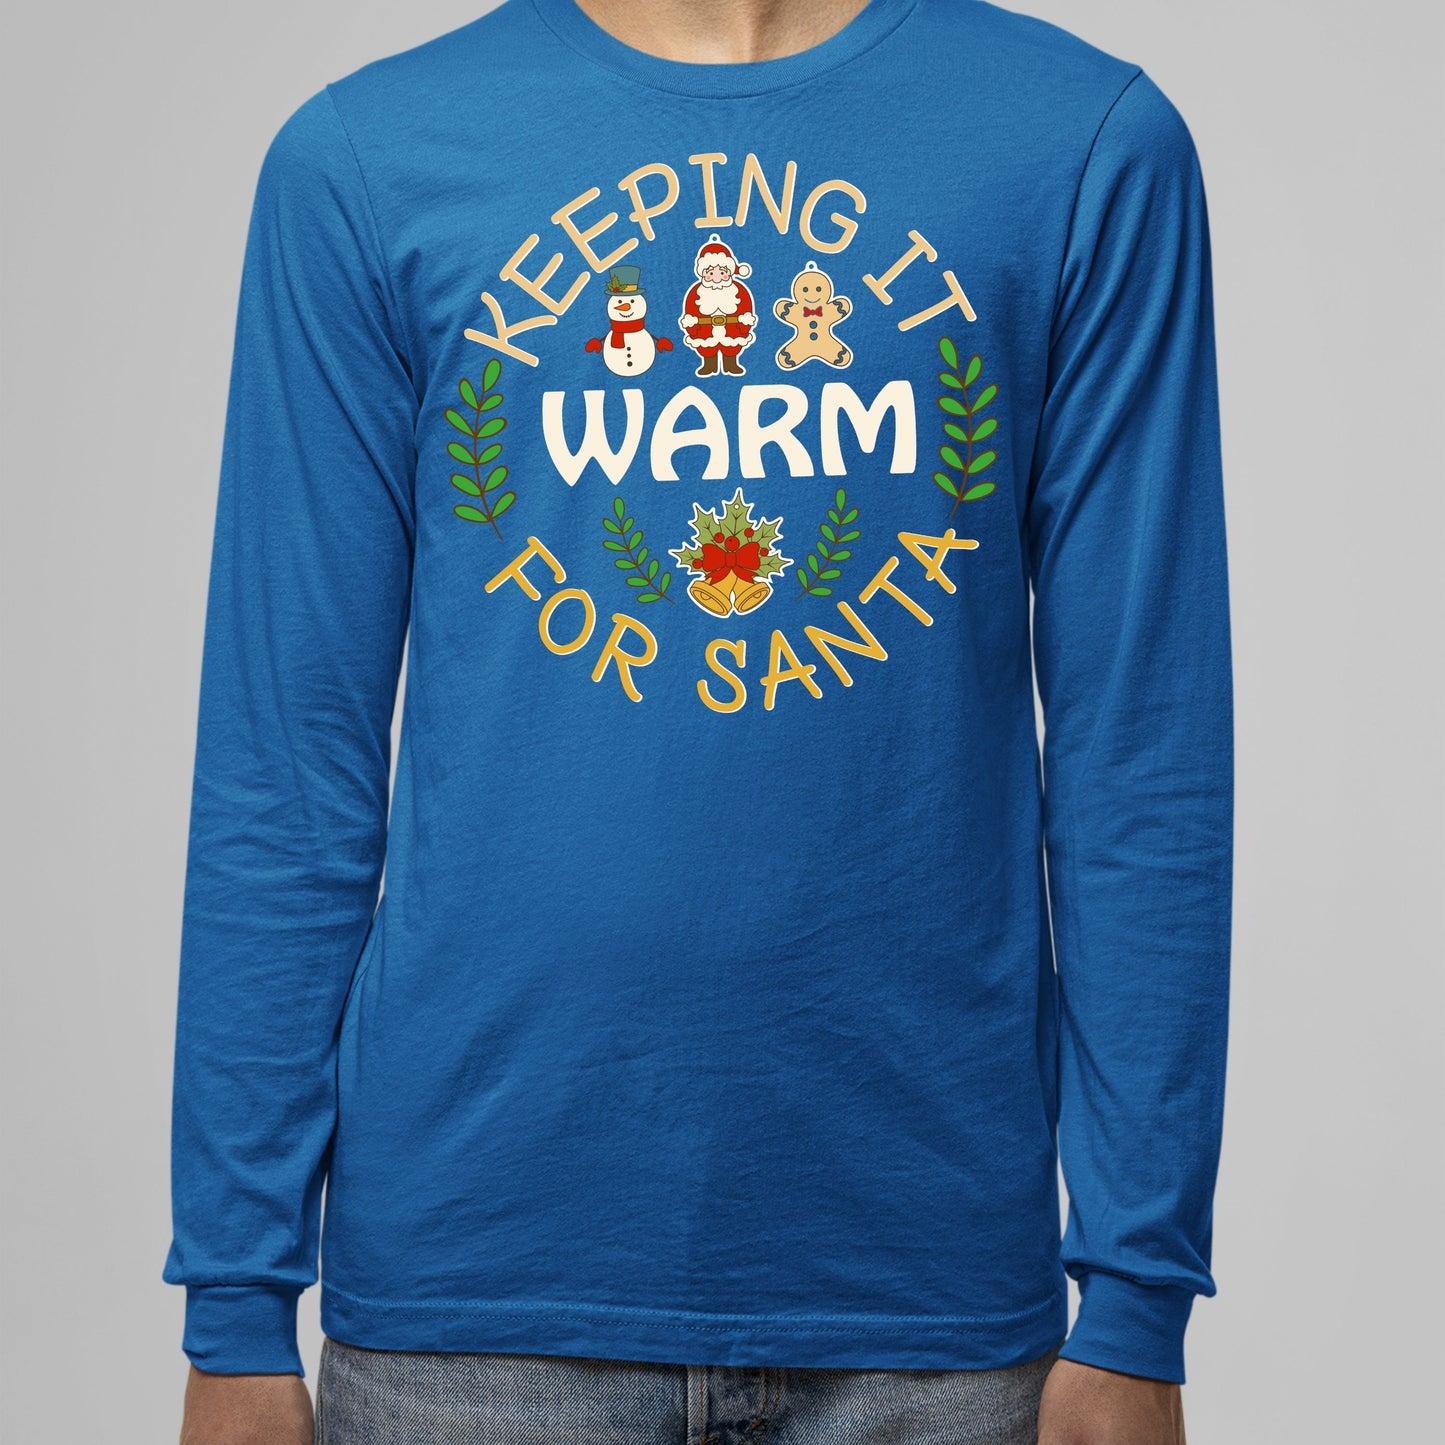 Keeping It Warm for Santa, Christmas Sweatshirt, Christmas Crewneck For Men, Christmas Long Sleeves, Christmas Present, Christmas Sweater